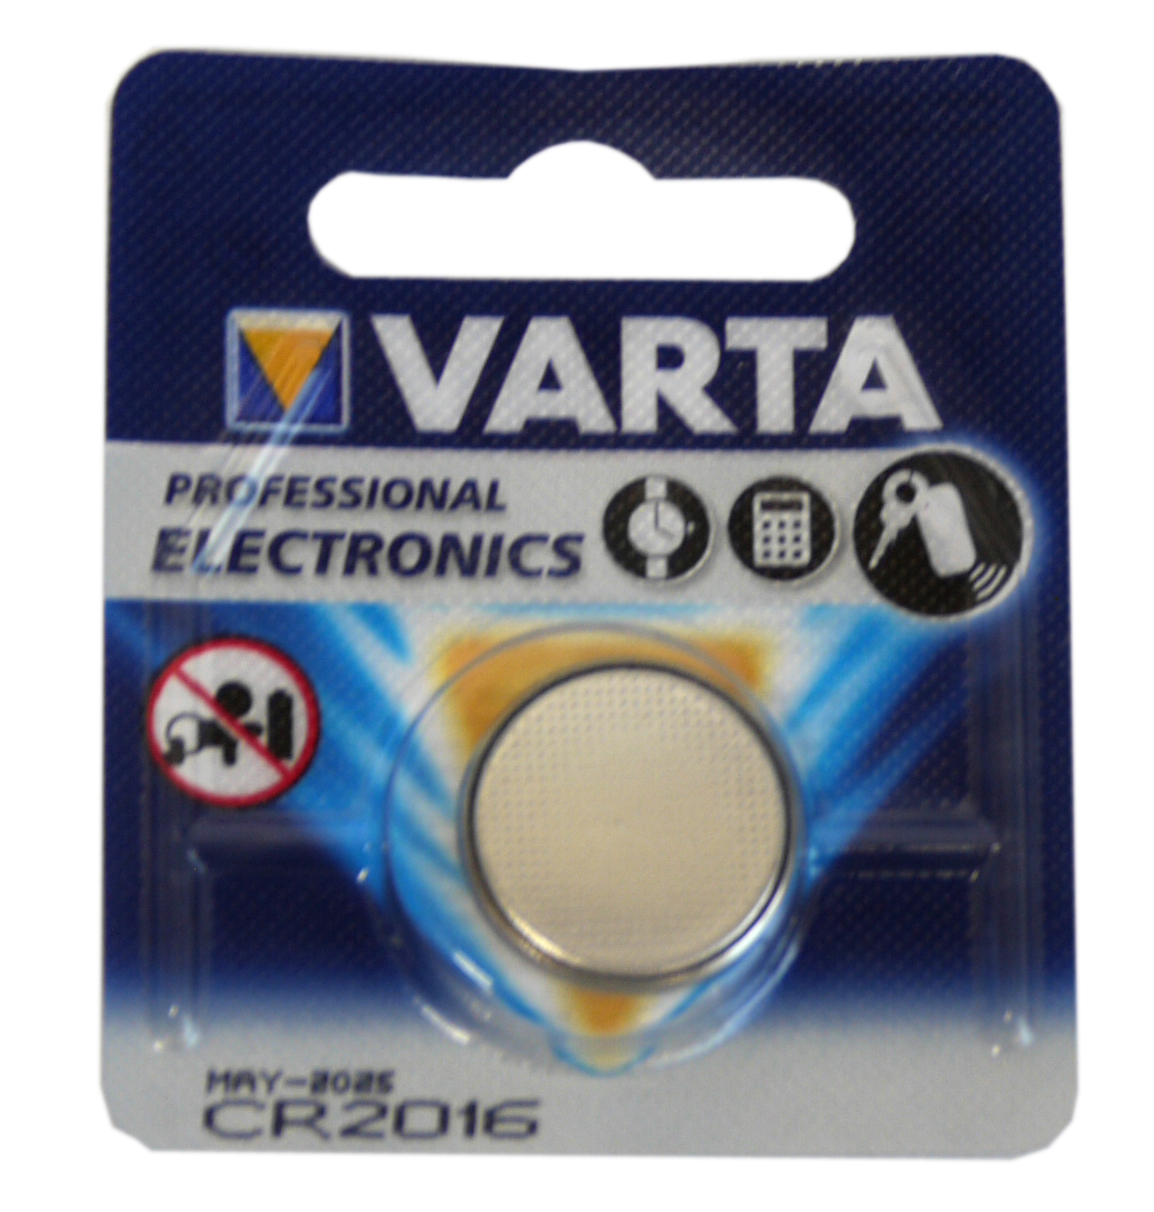 53684 - Varta electronics CR2016, primary lithium Button, set of 1